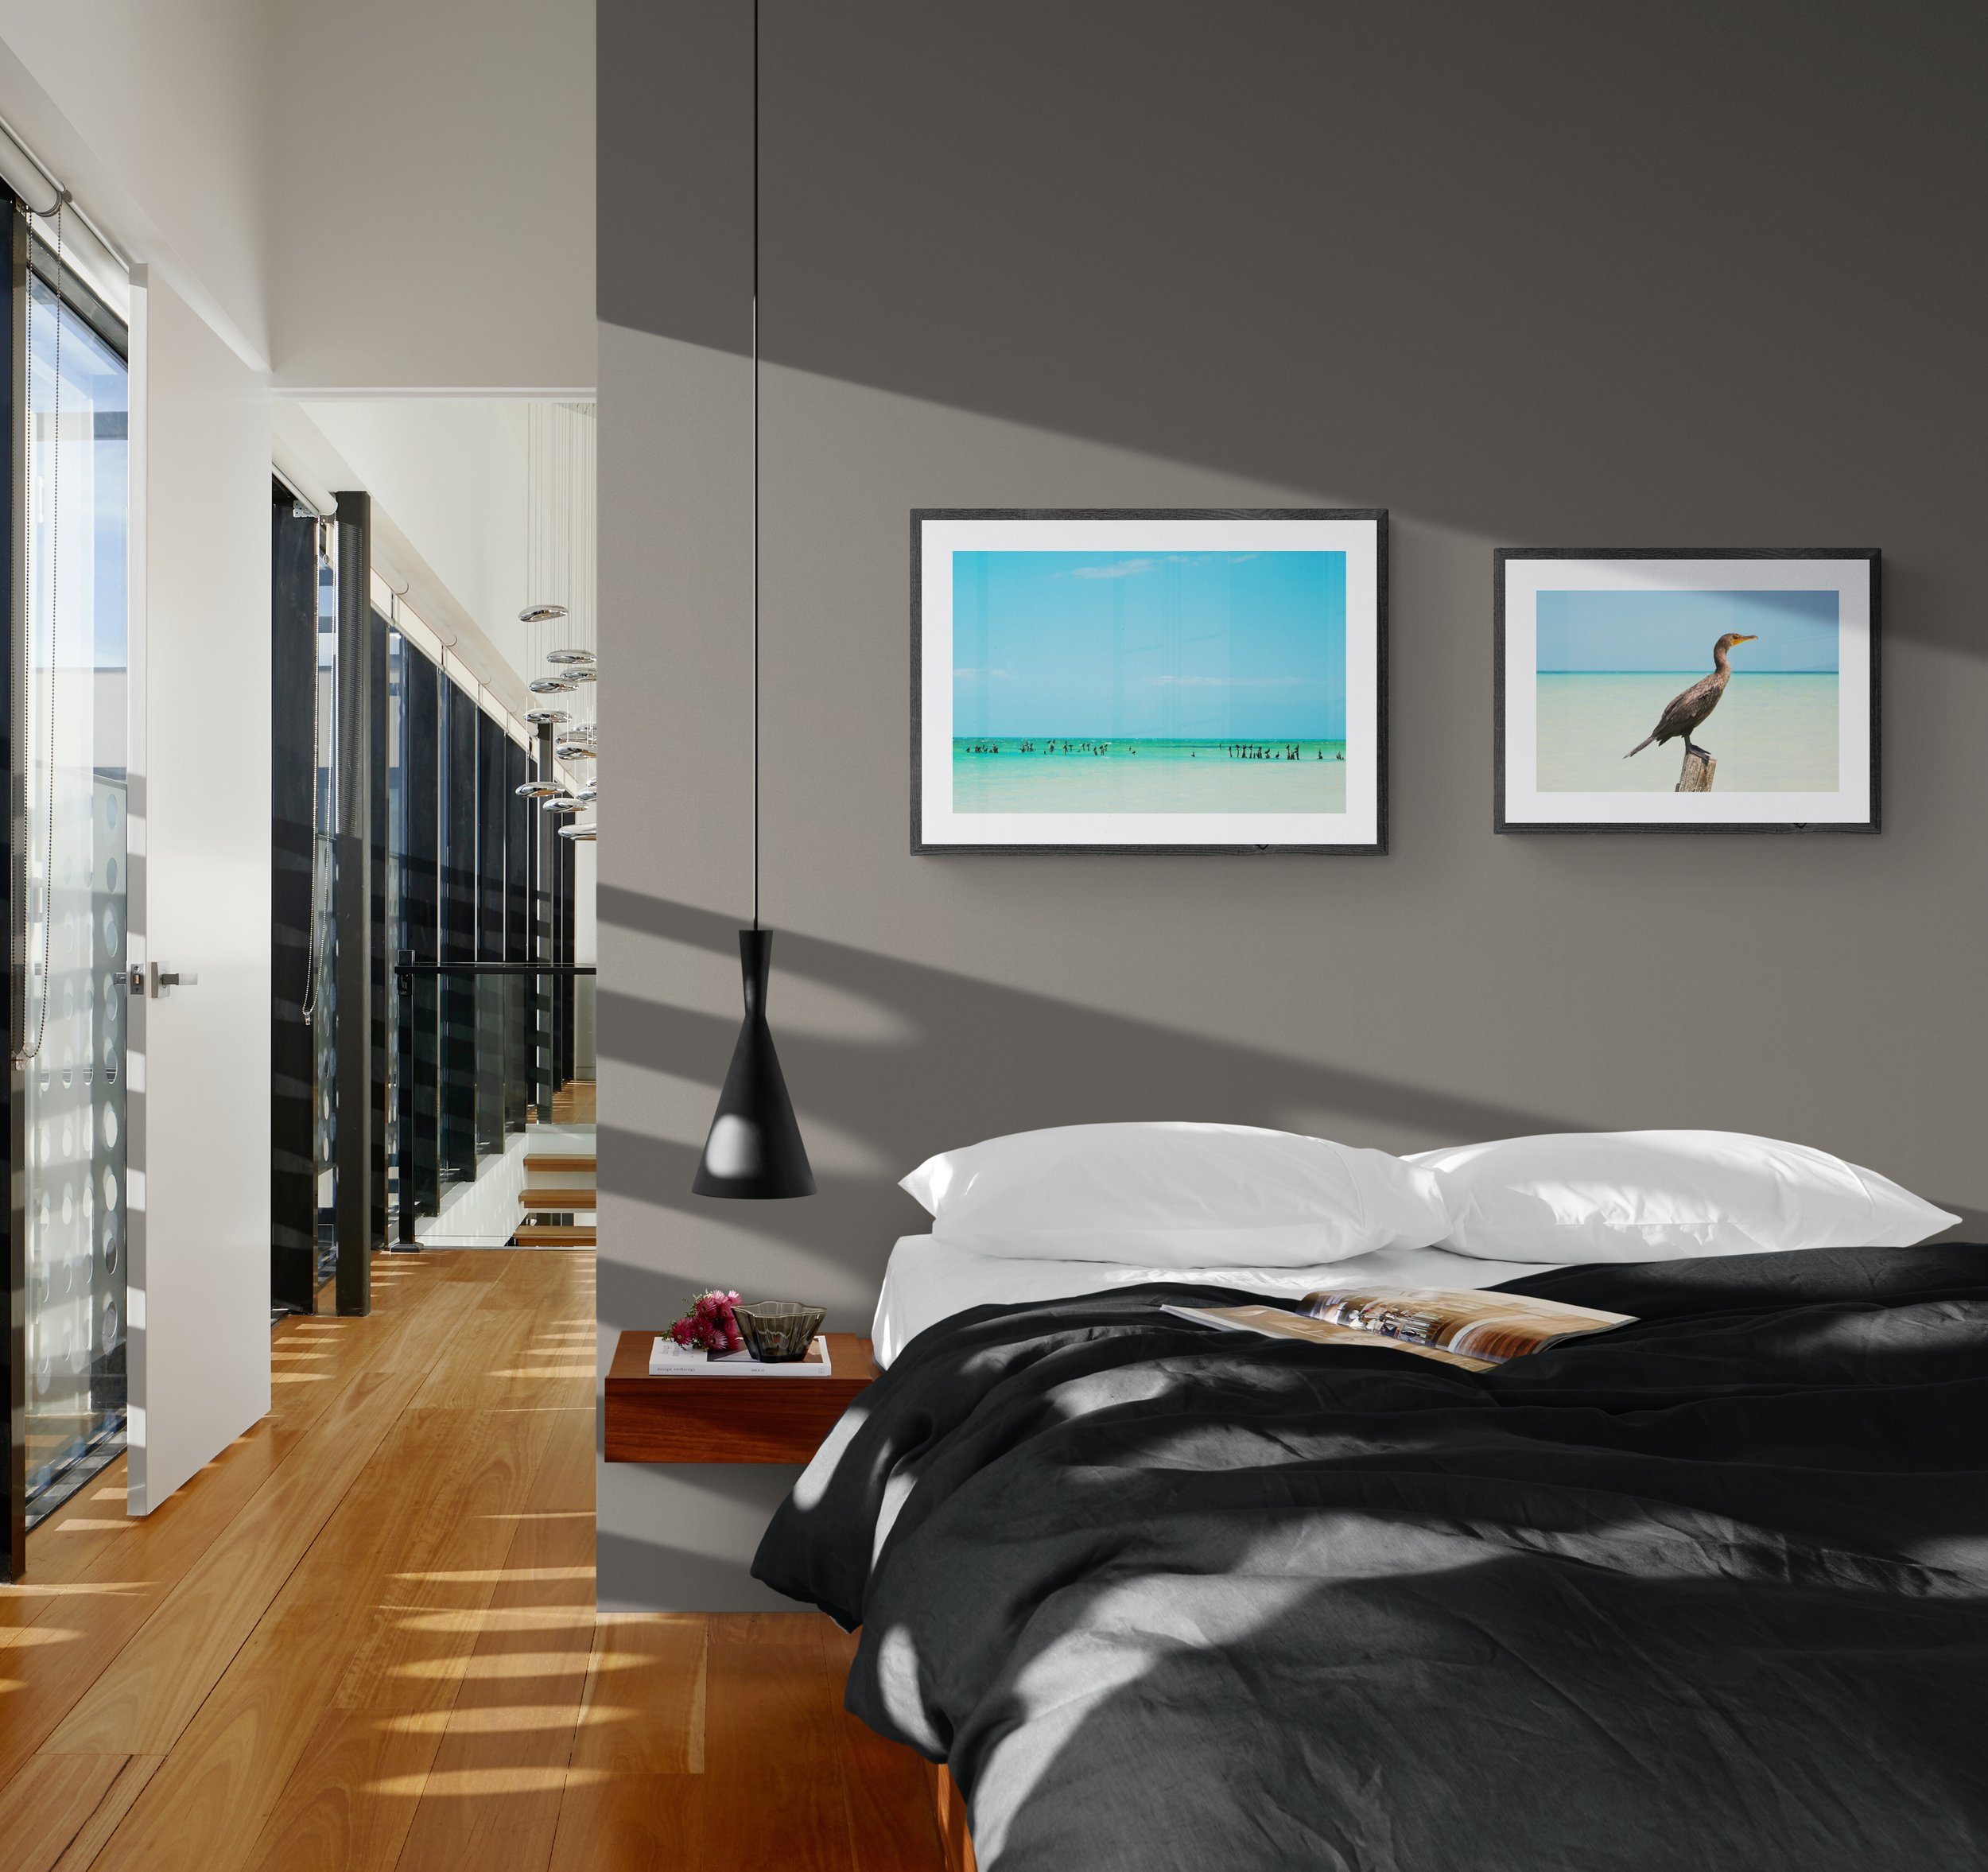 Stylish_apartment_bedroom_with_large_windows (1).jpg